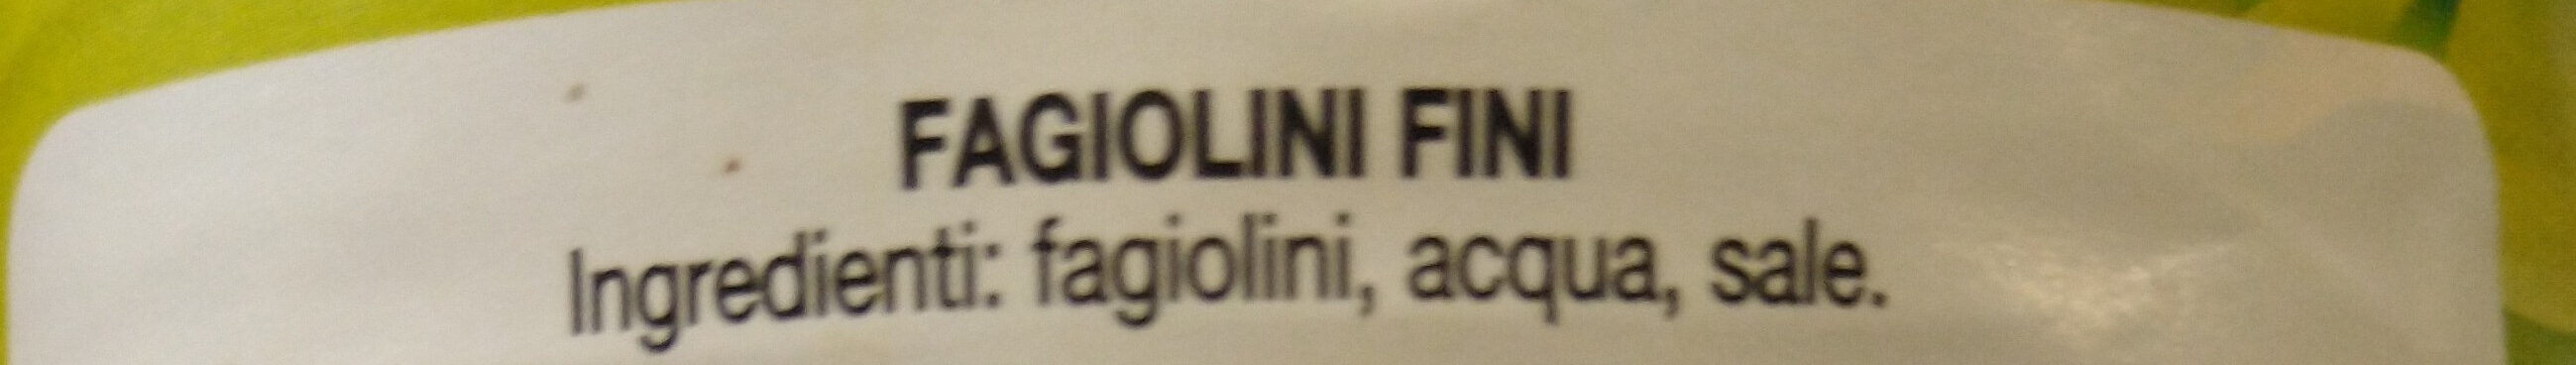 Fagiolini - Ingredienti